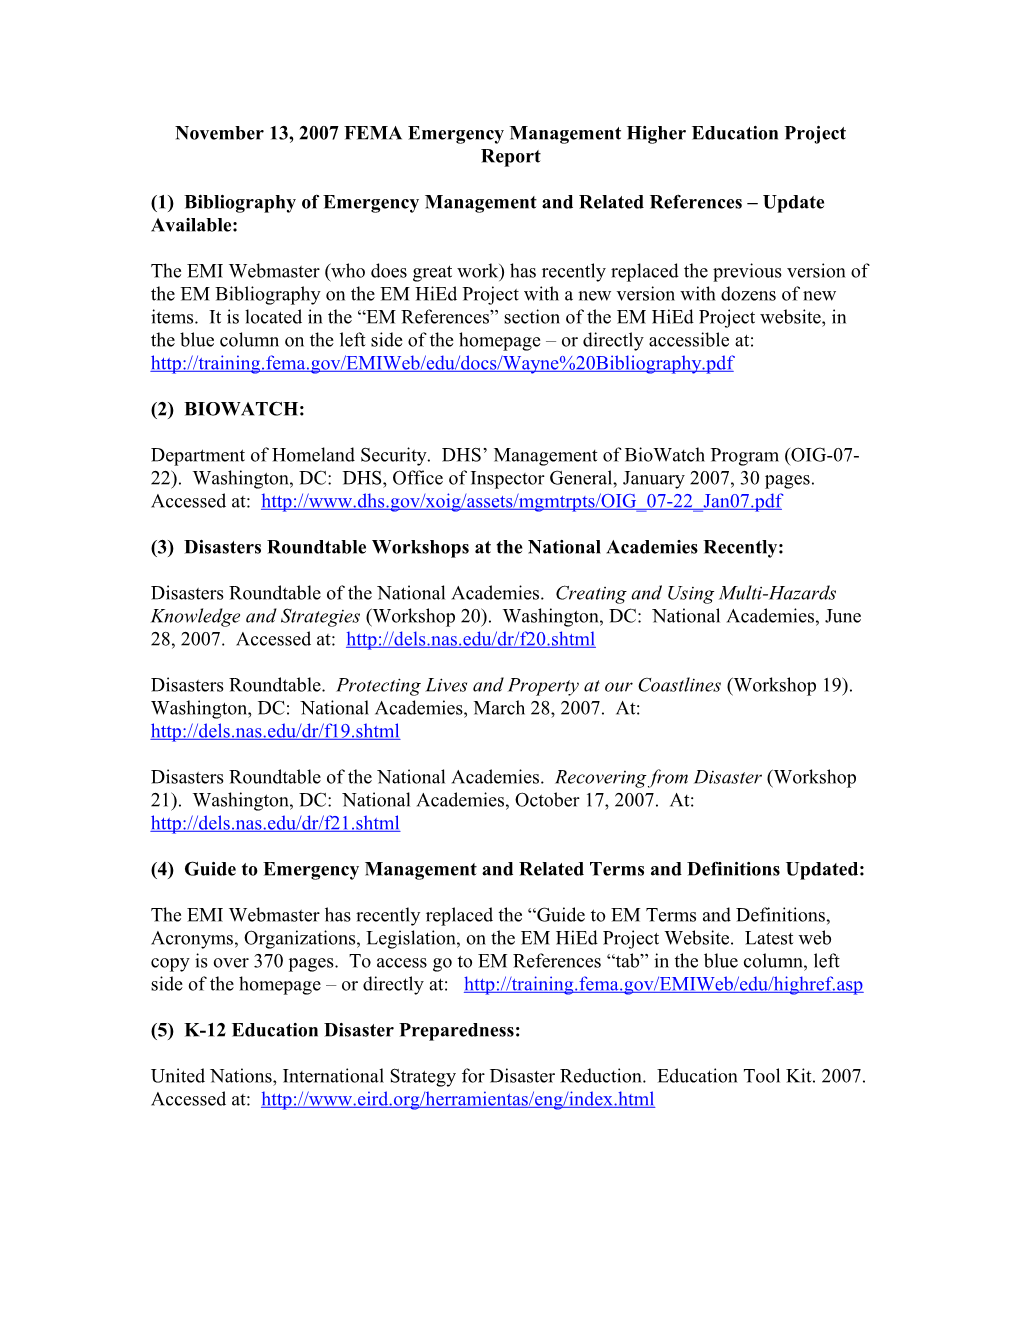 November 13, 2007 FEMA Emergency Management Higher Education Project Report